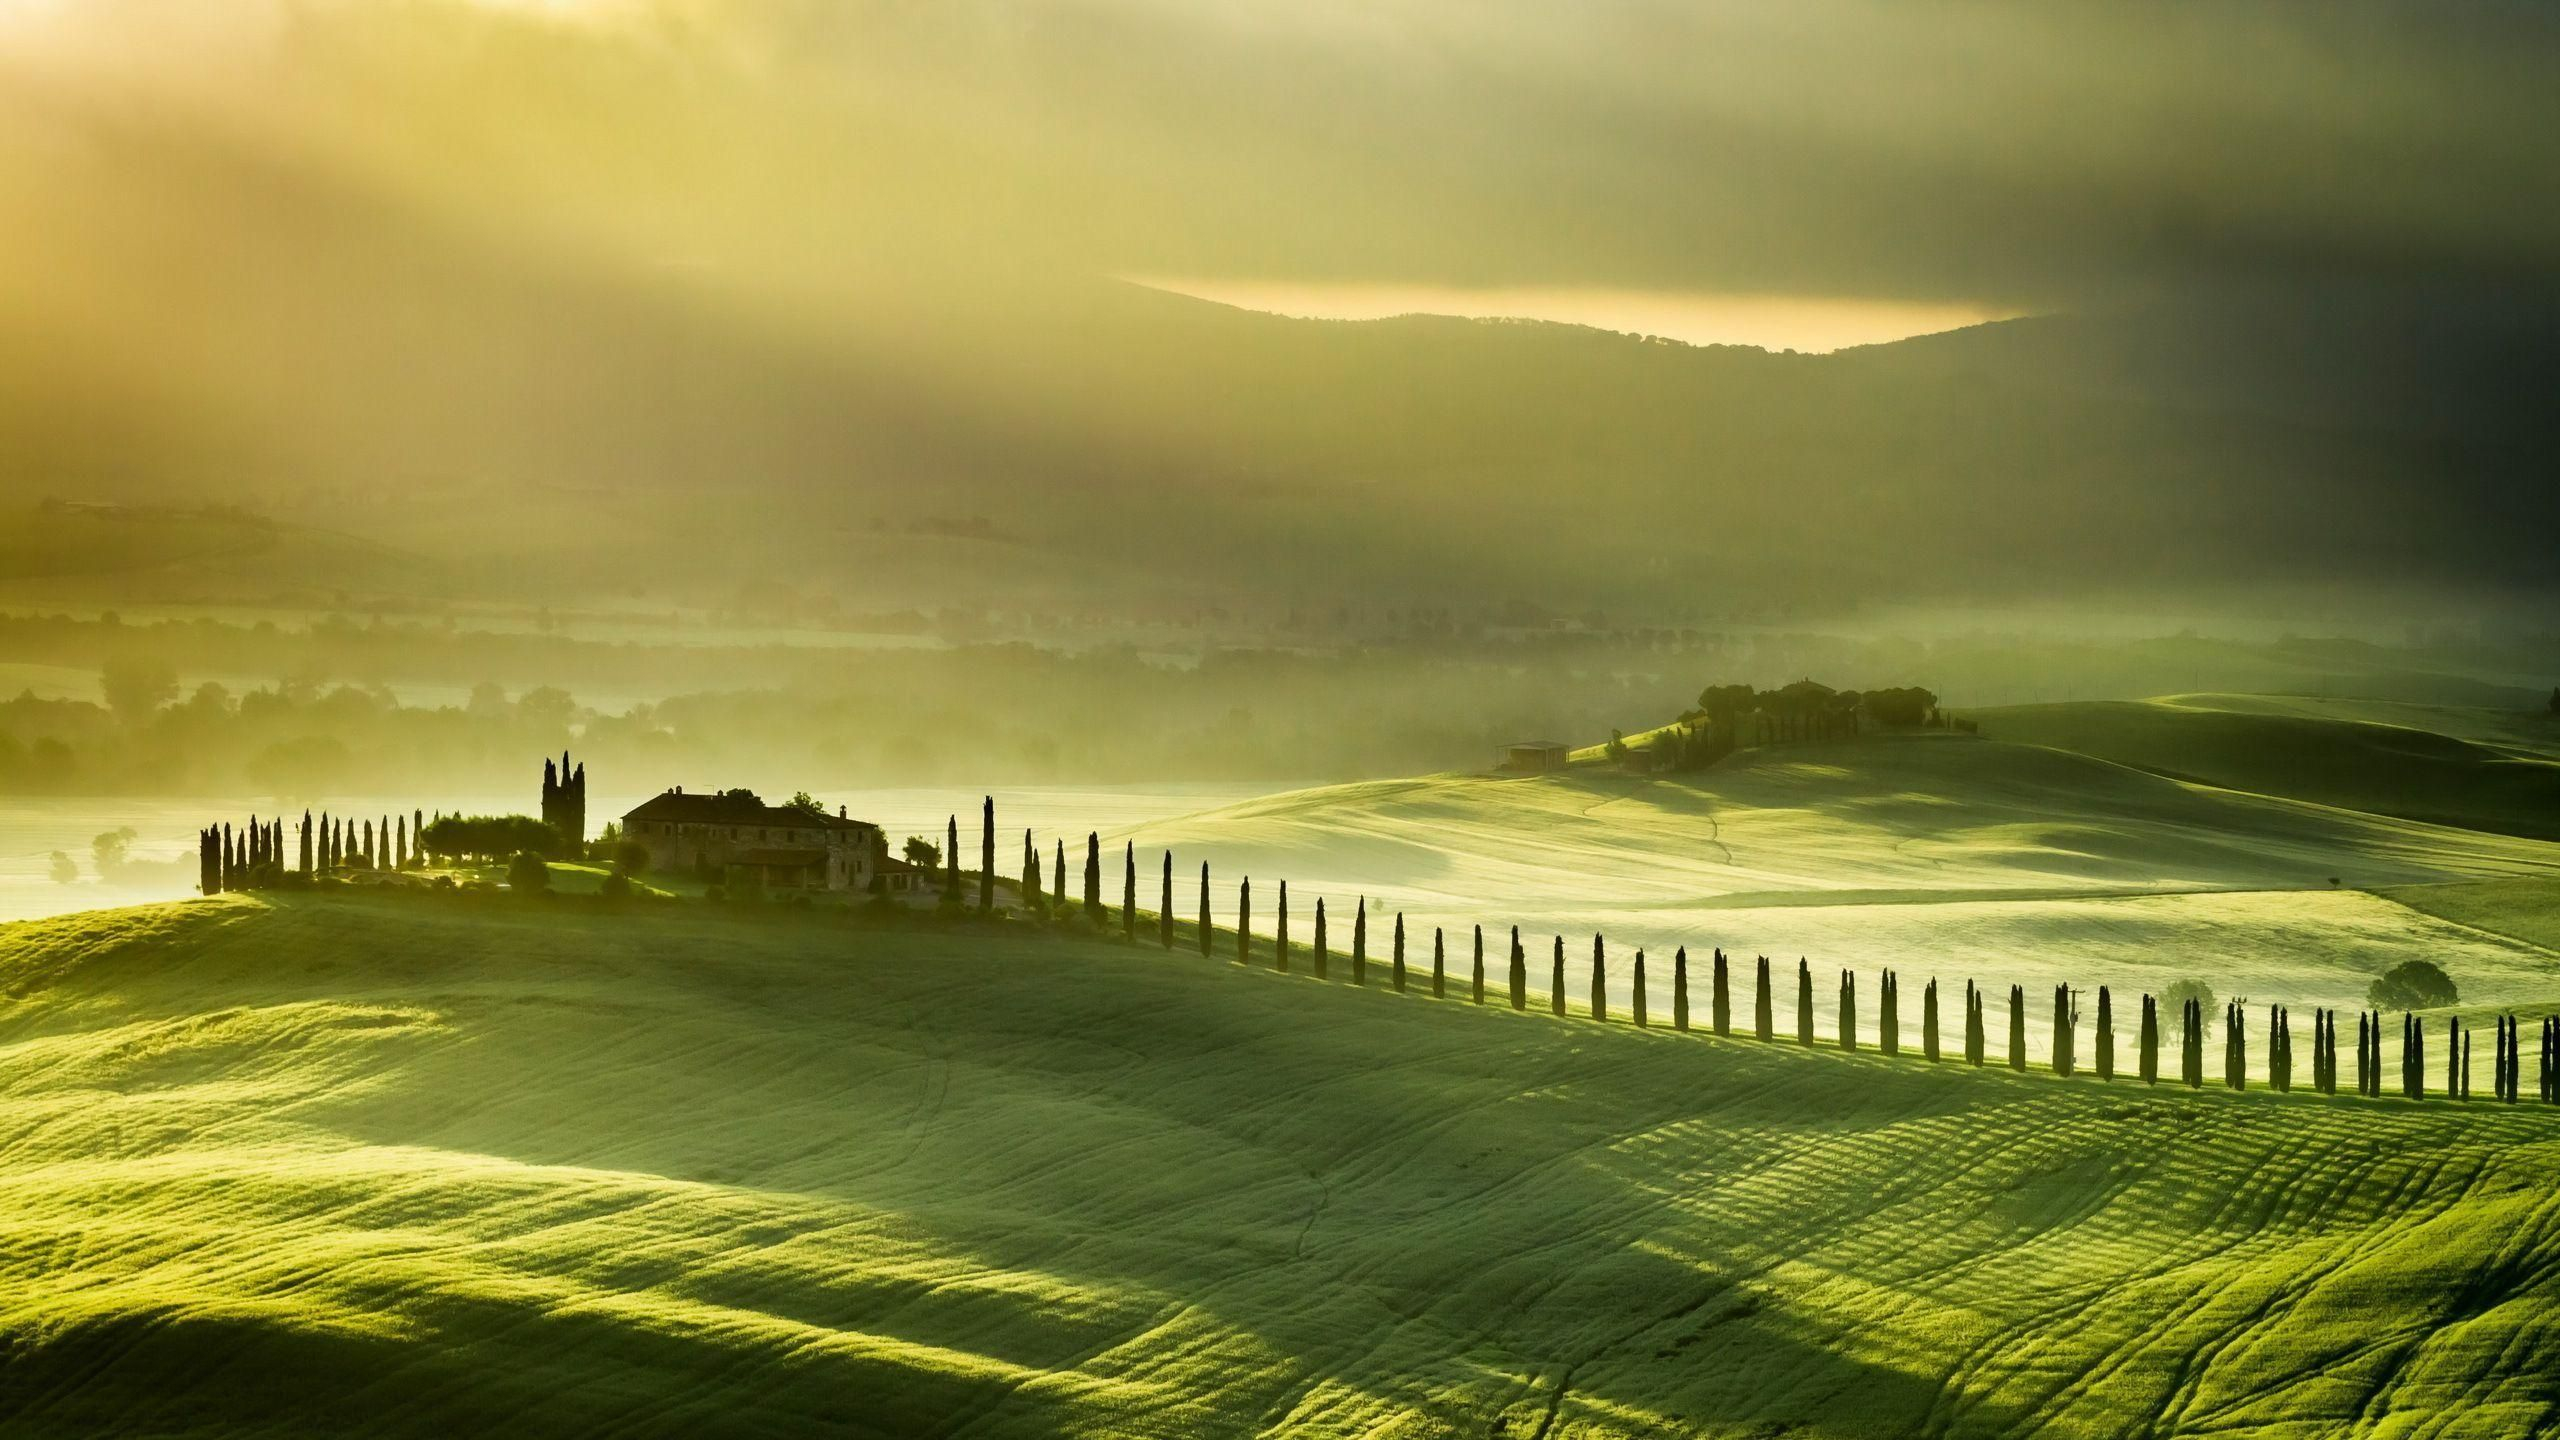 2560x1440 Tuscany Wallpapers | Beautiful landscape images, Italy landscape, Tuscany landscape